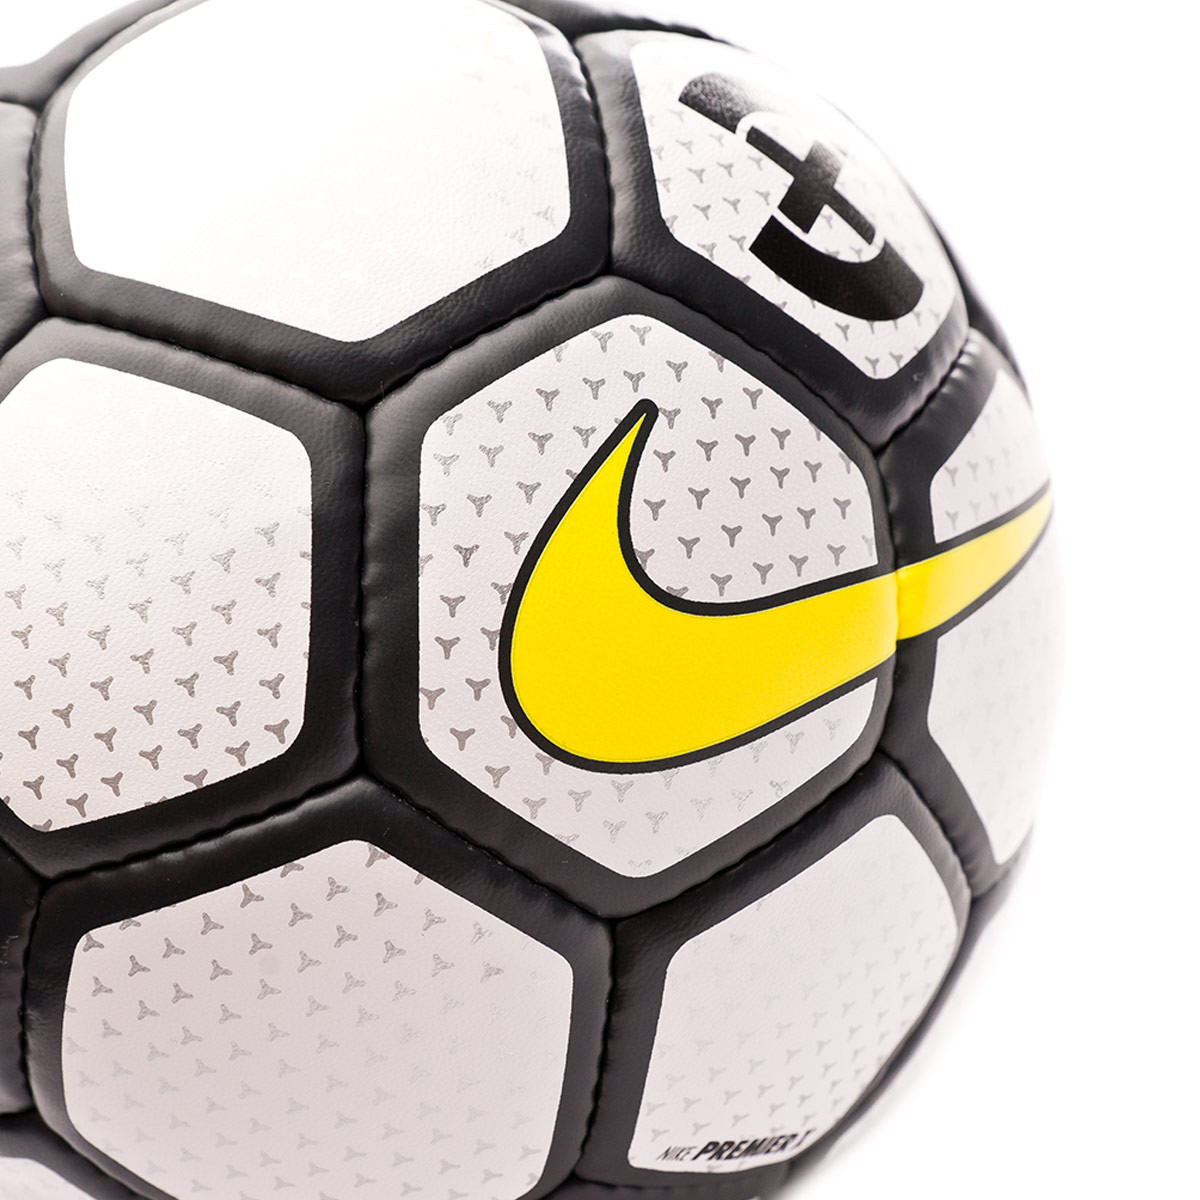 Pallone Nike Premier X 2019-2020 White-Anthracite-Optical yellow - Negozio  di calcio Fútbol Emotion